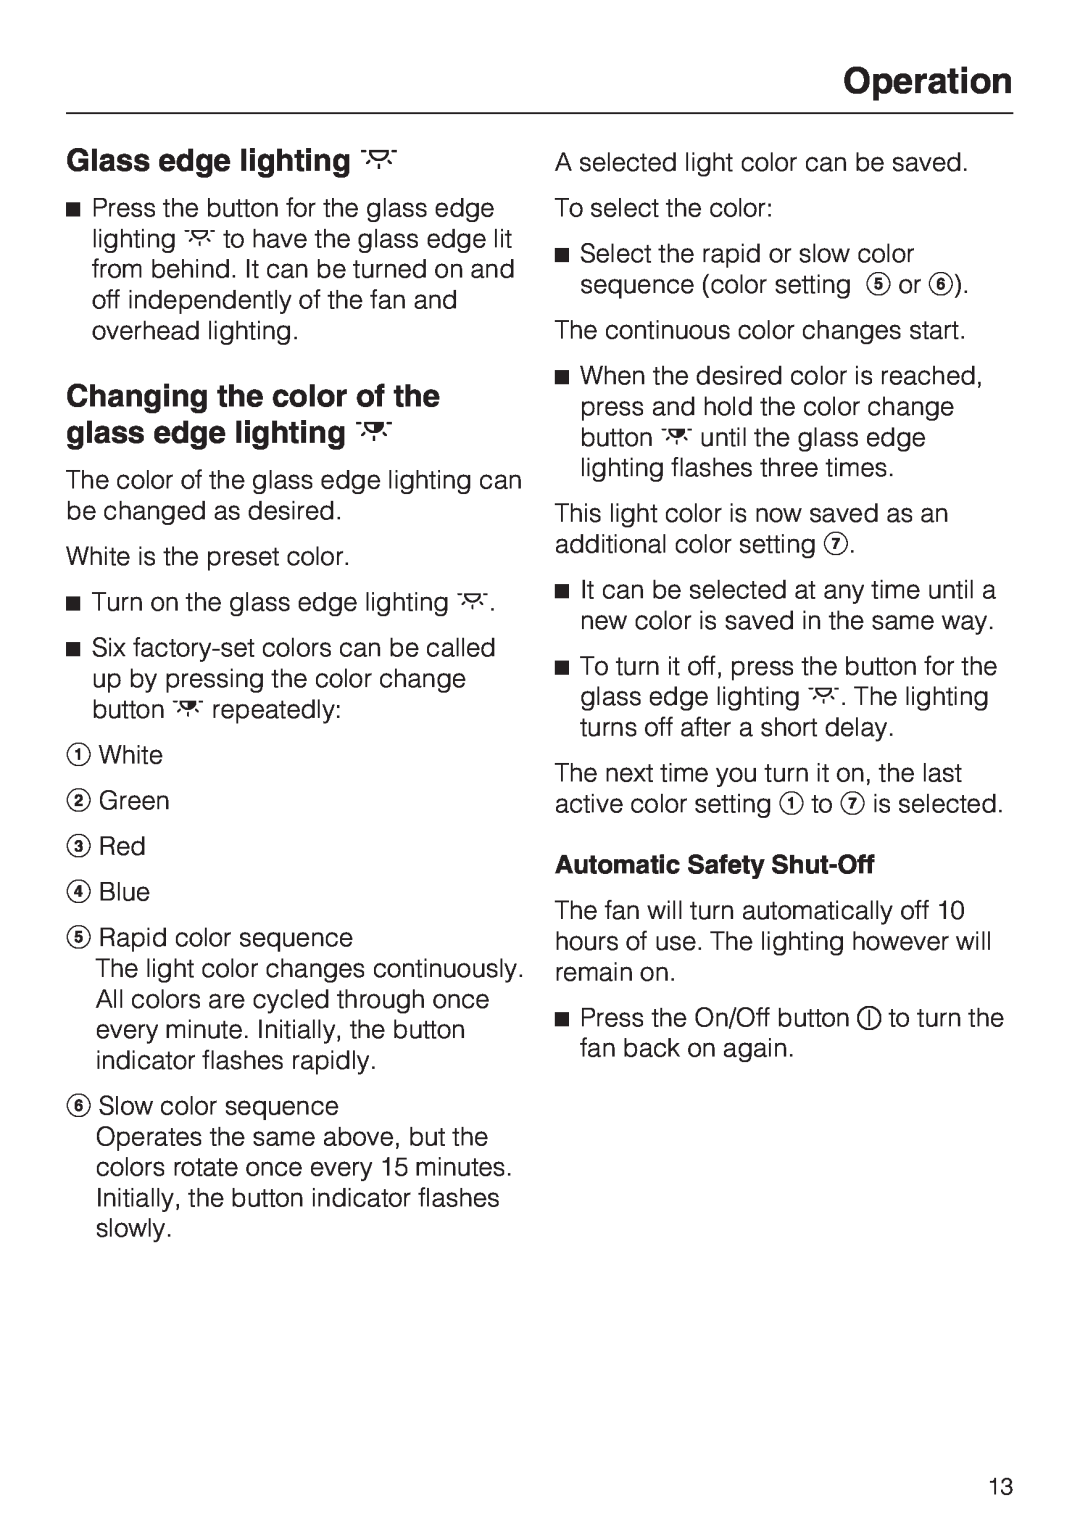 Miele DA 6290 W Glass edge lighting, Changing the color of the glass edge lighting, Operation, Automatic Safety Shut-Off 